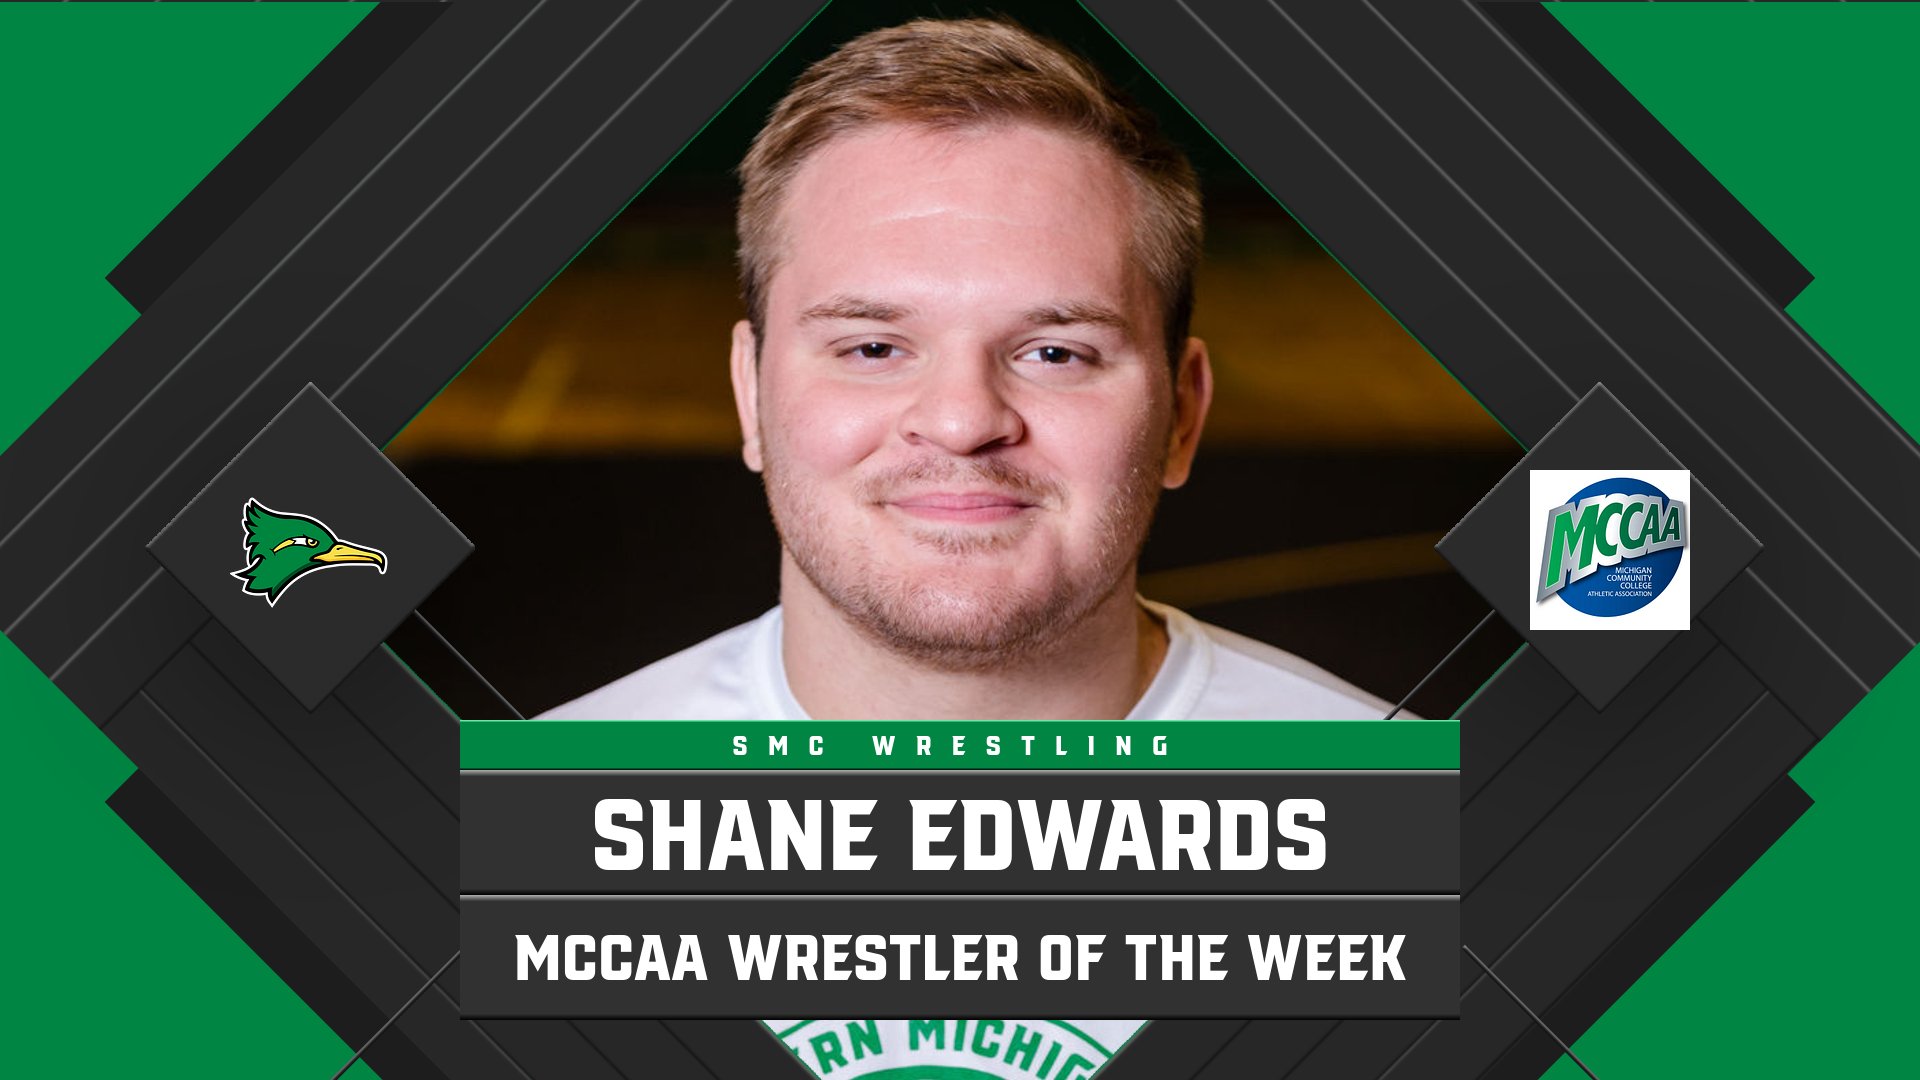 Shane Edwards Wins MCCAA Wrestler of the Week